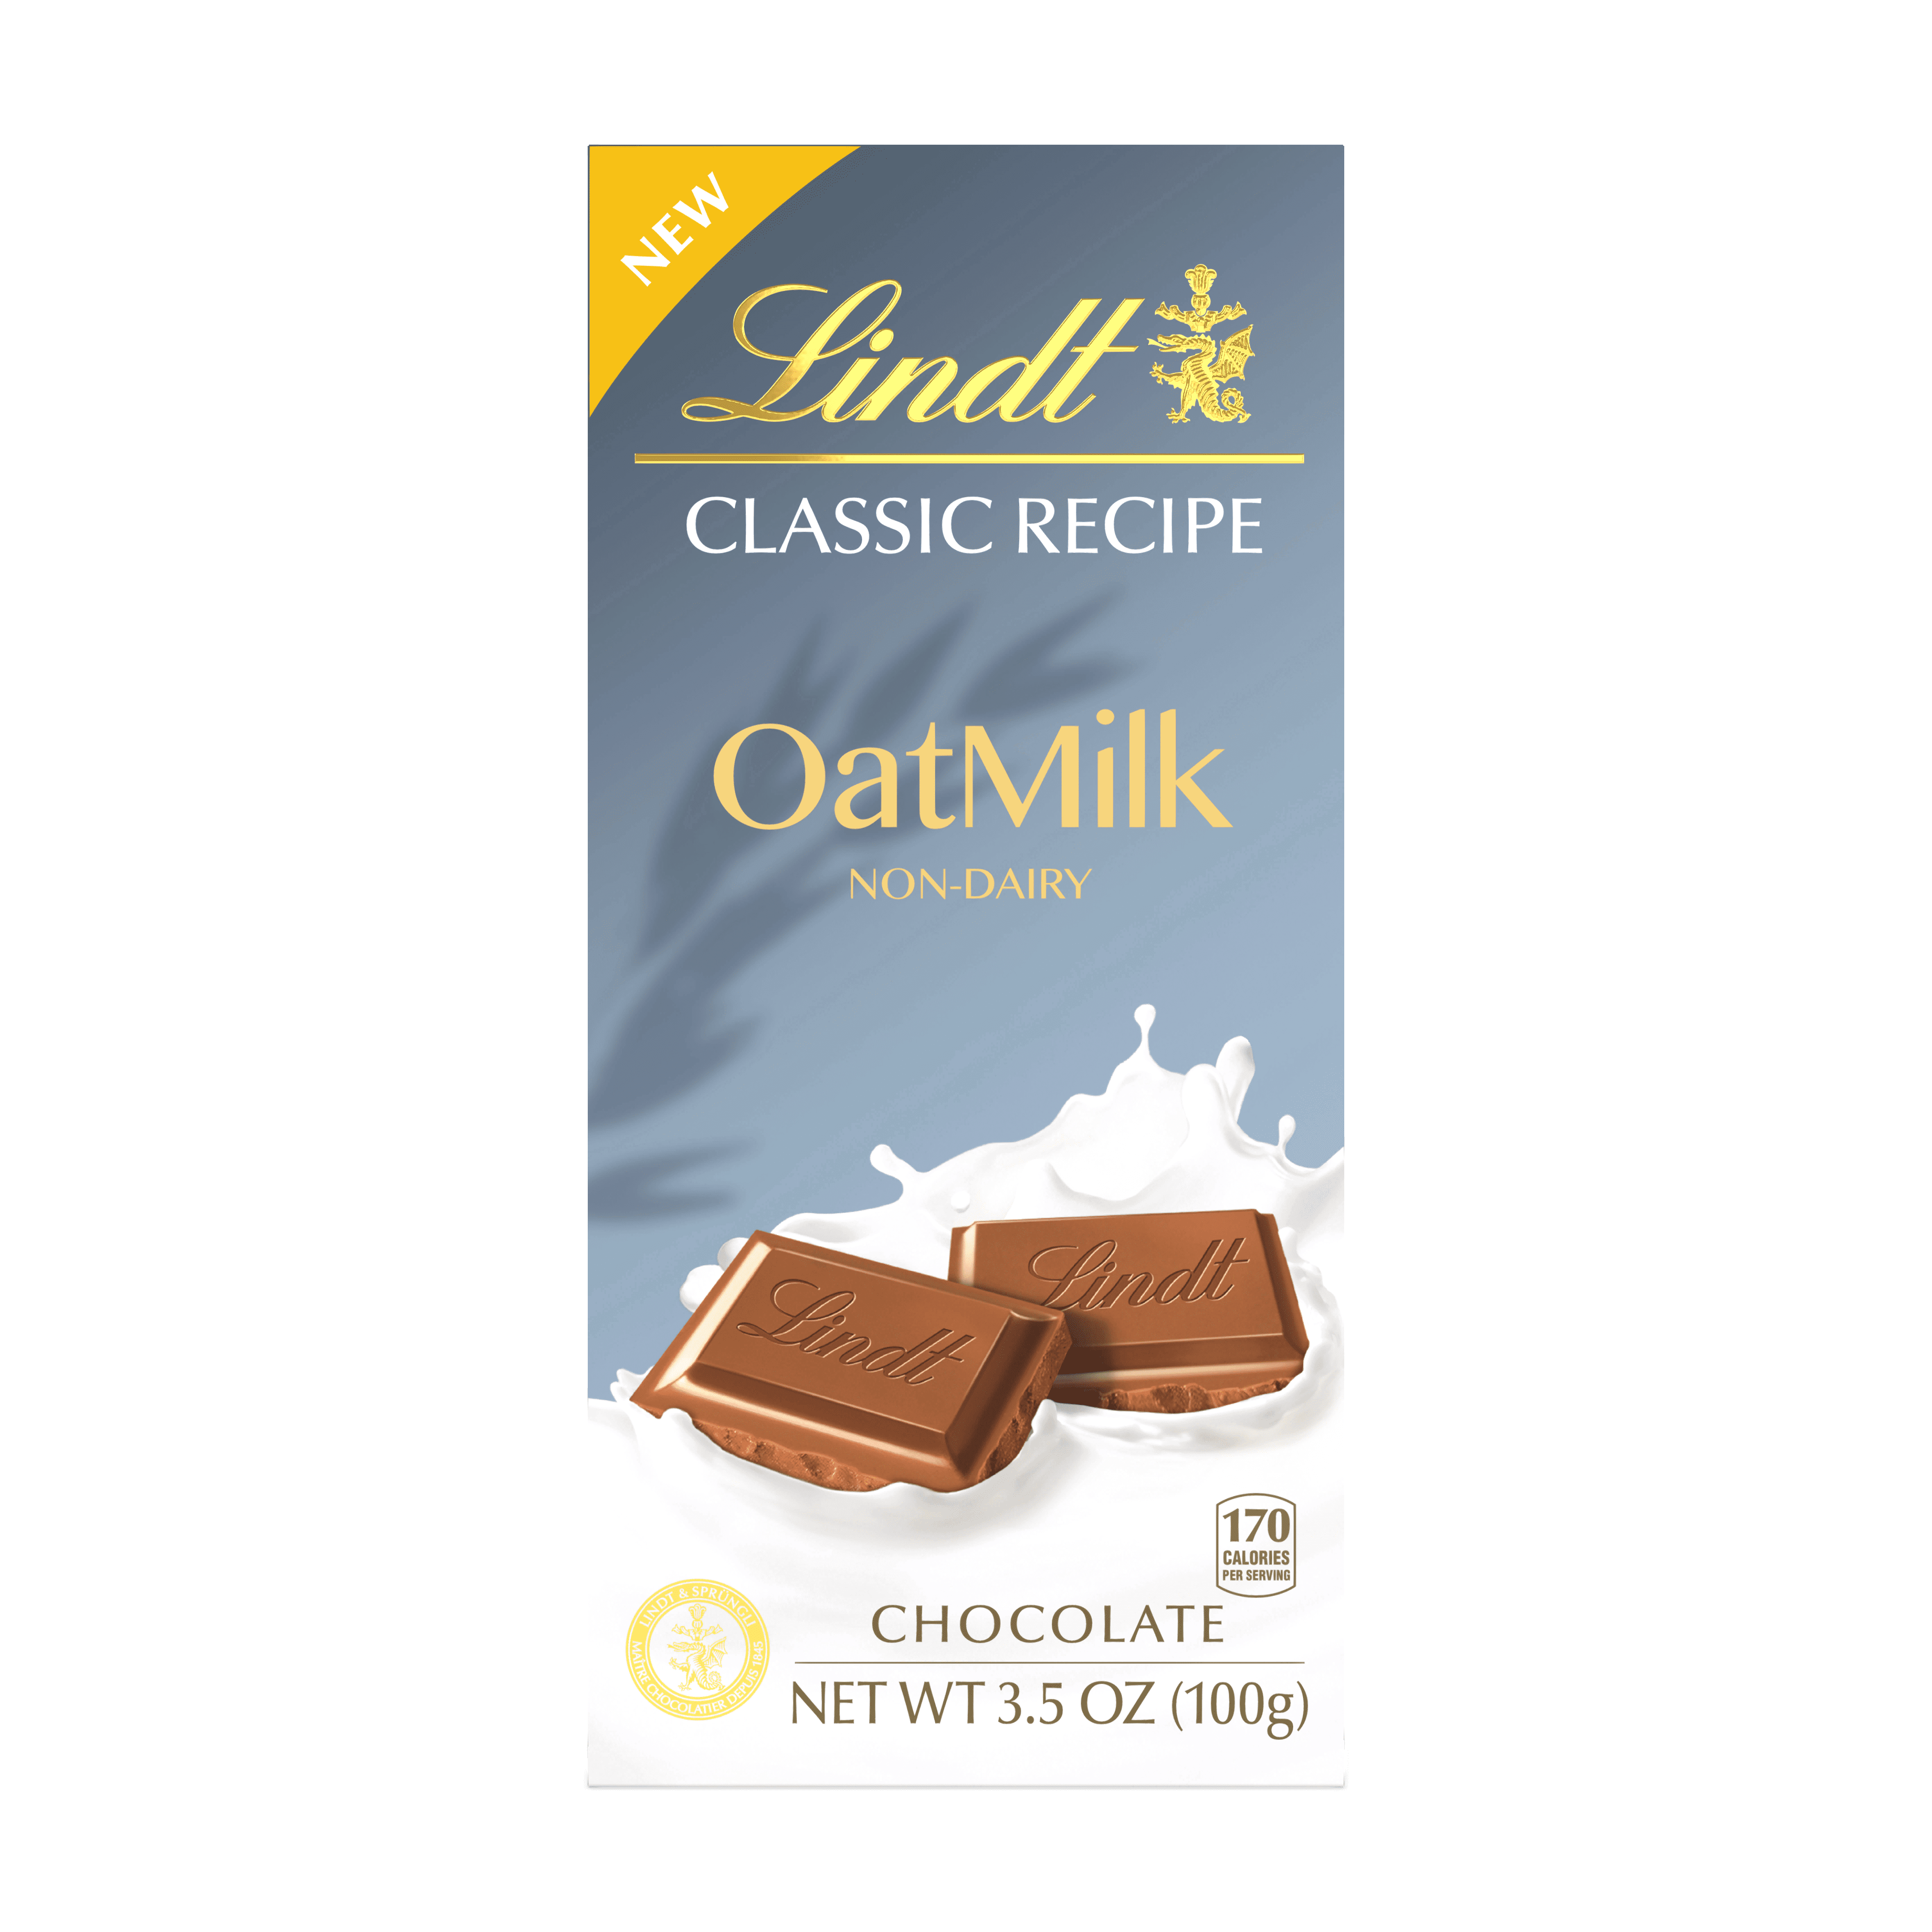 Non-Dairy Oatmilk Salted Caramel Chocolate CLASSIC RECIPE Bar (3.5 oz)